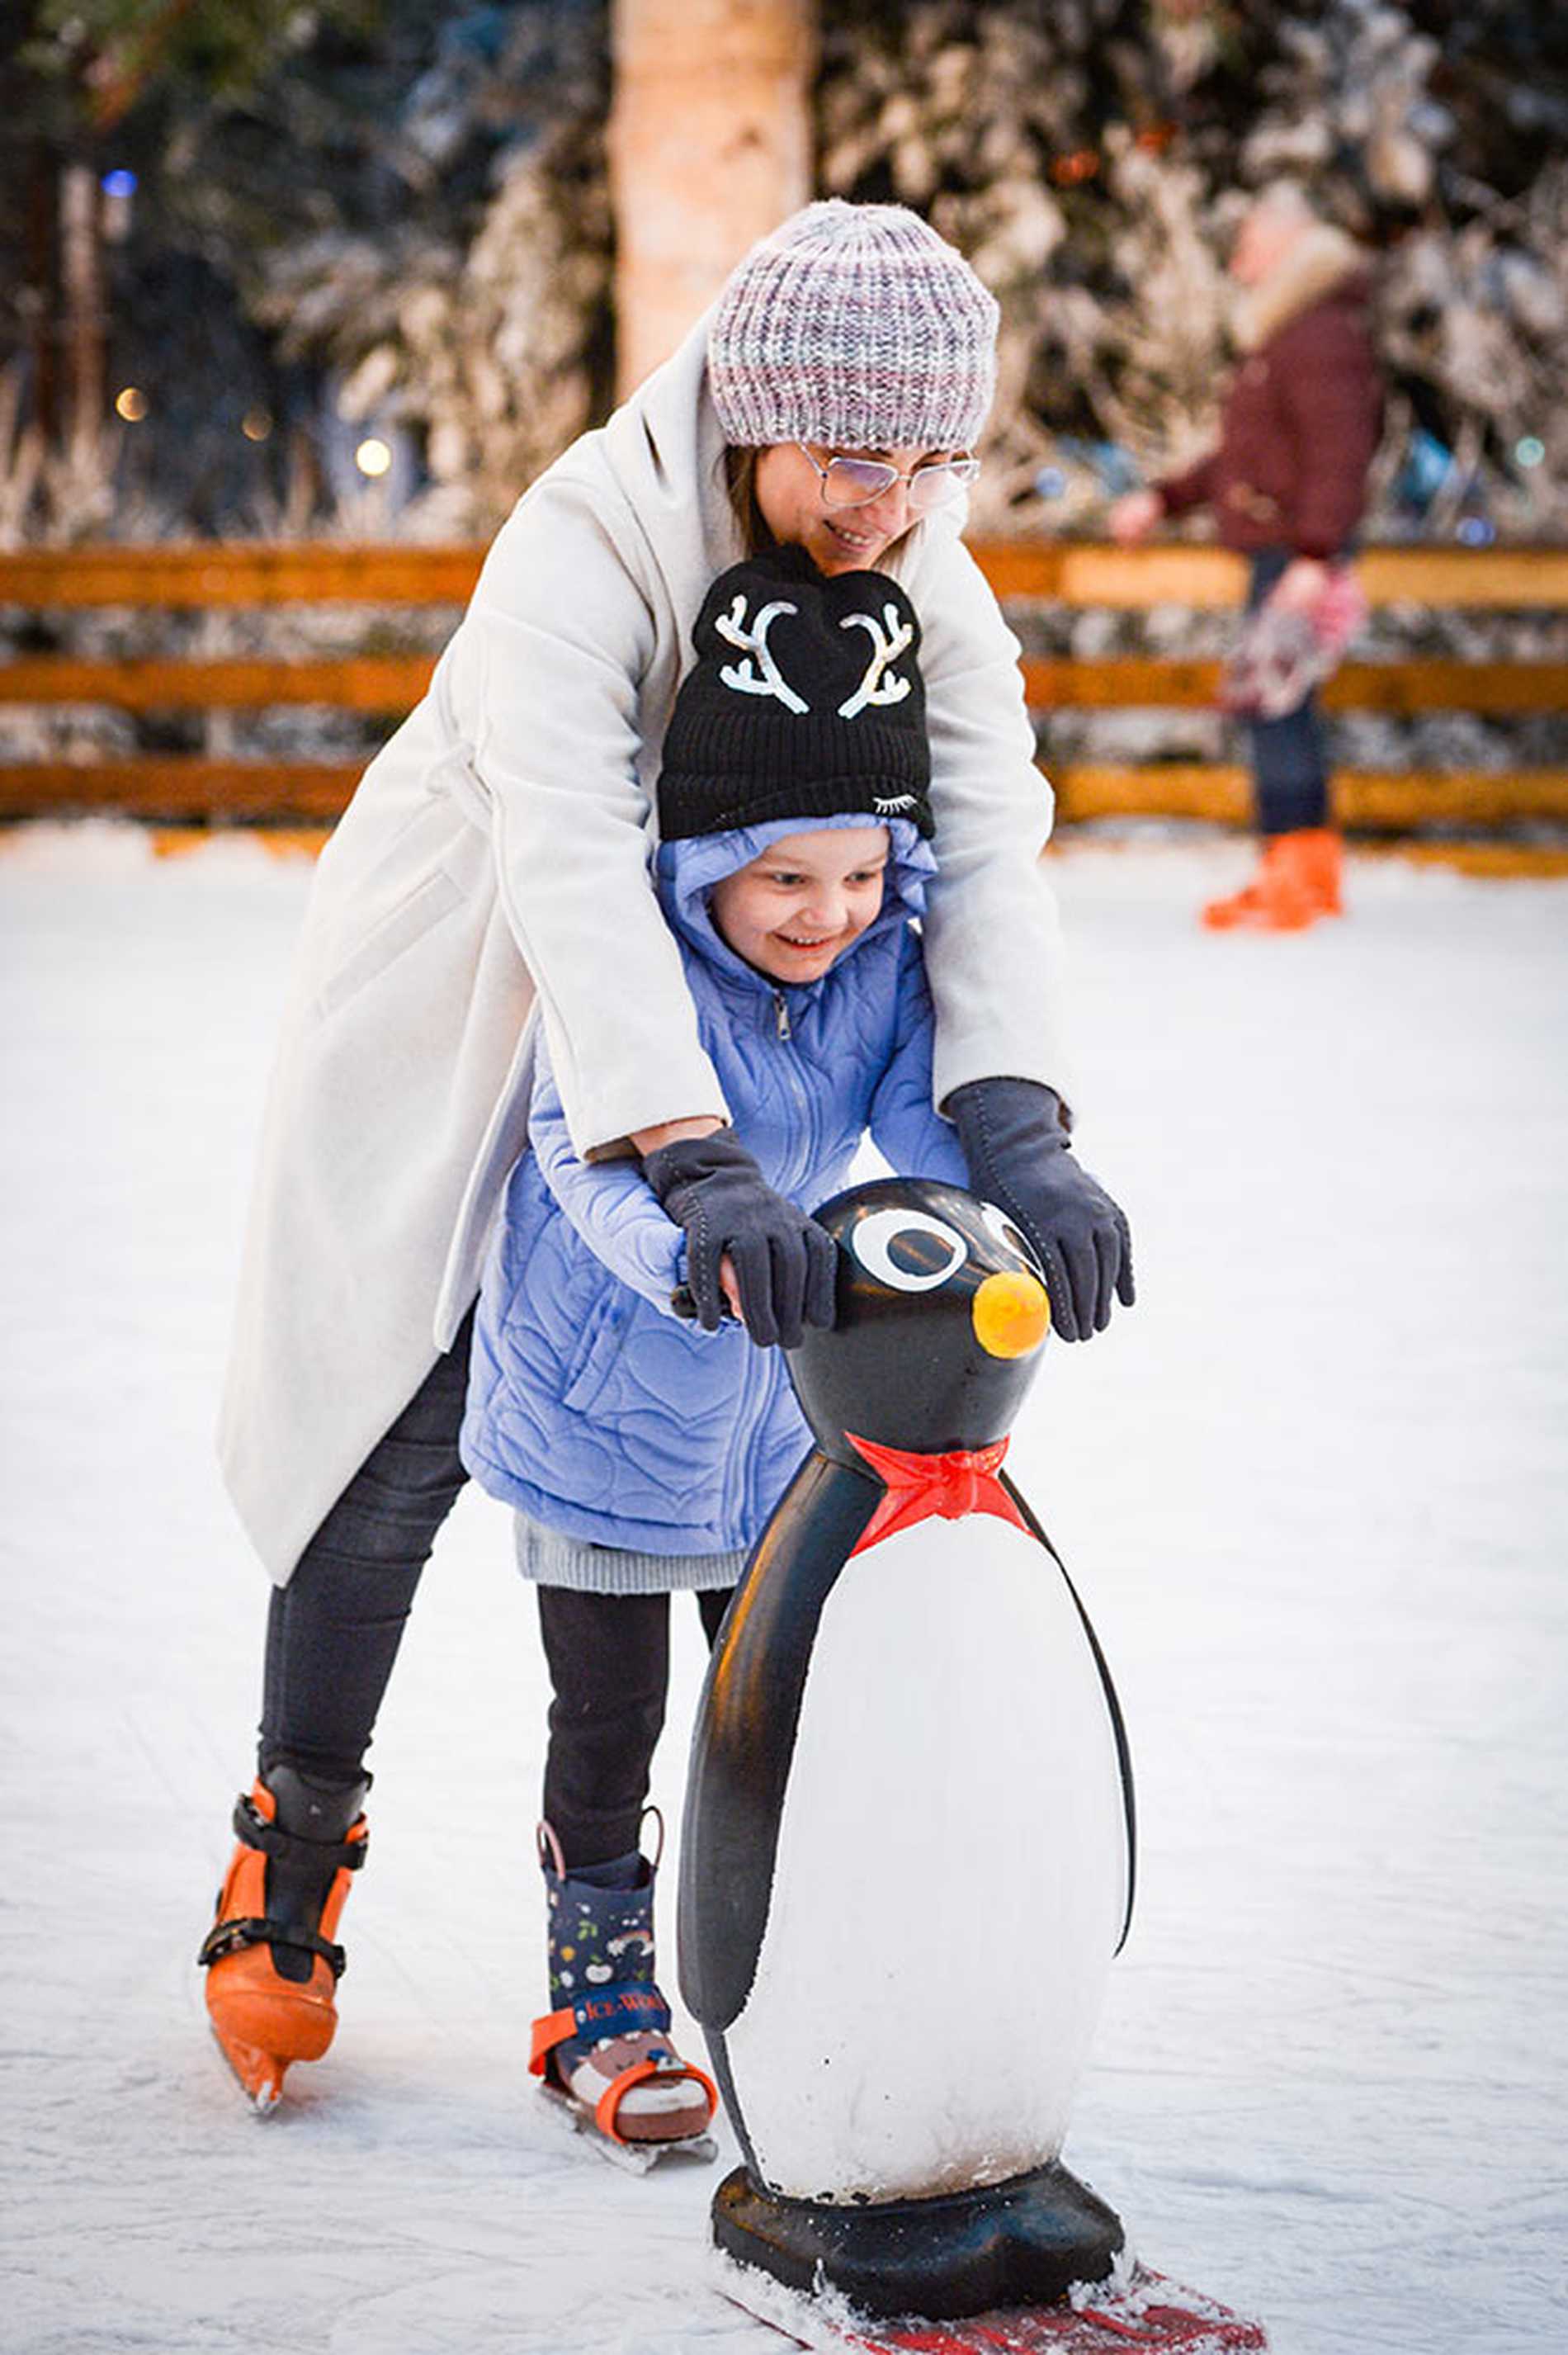 Julia holding onto a penguin stabiliser while she ice skates with mum.